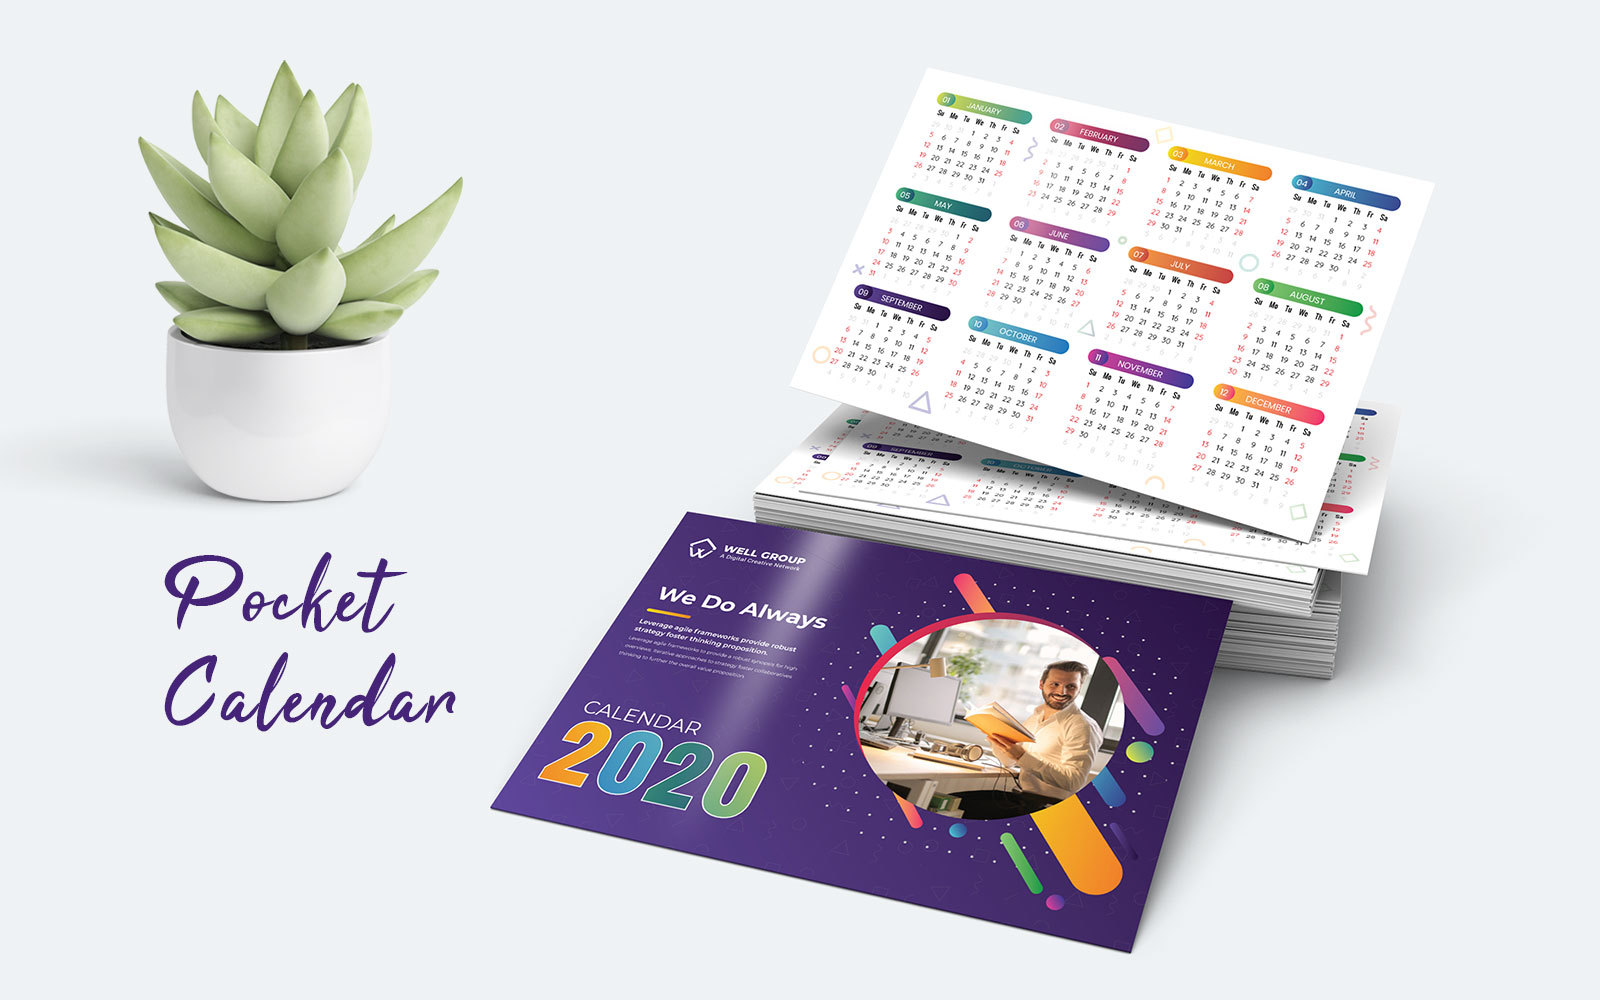 Pocket Calendar 2020 - Corporate Identity Template